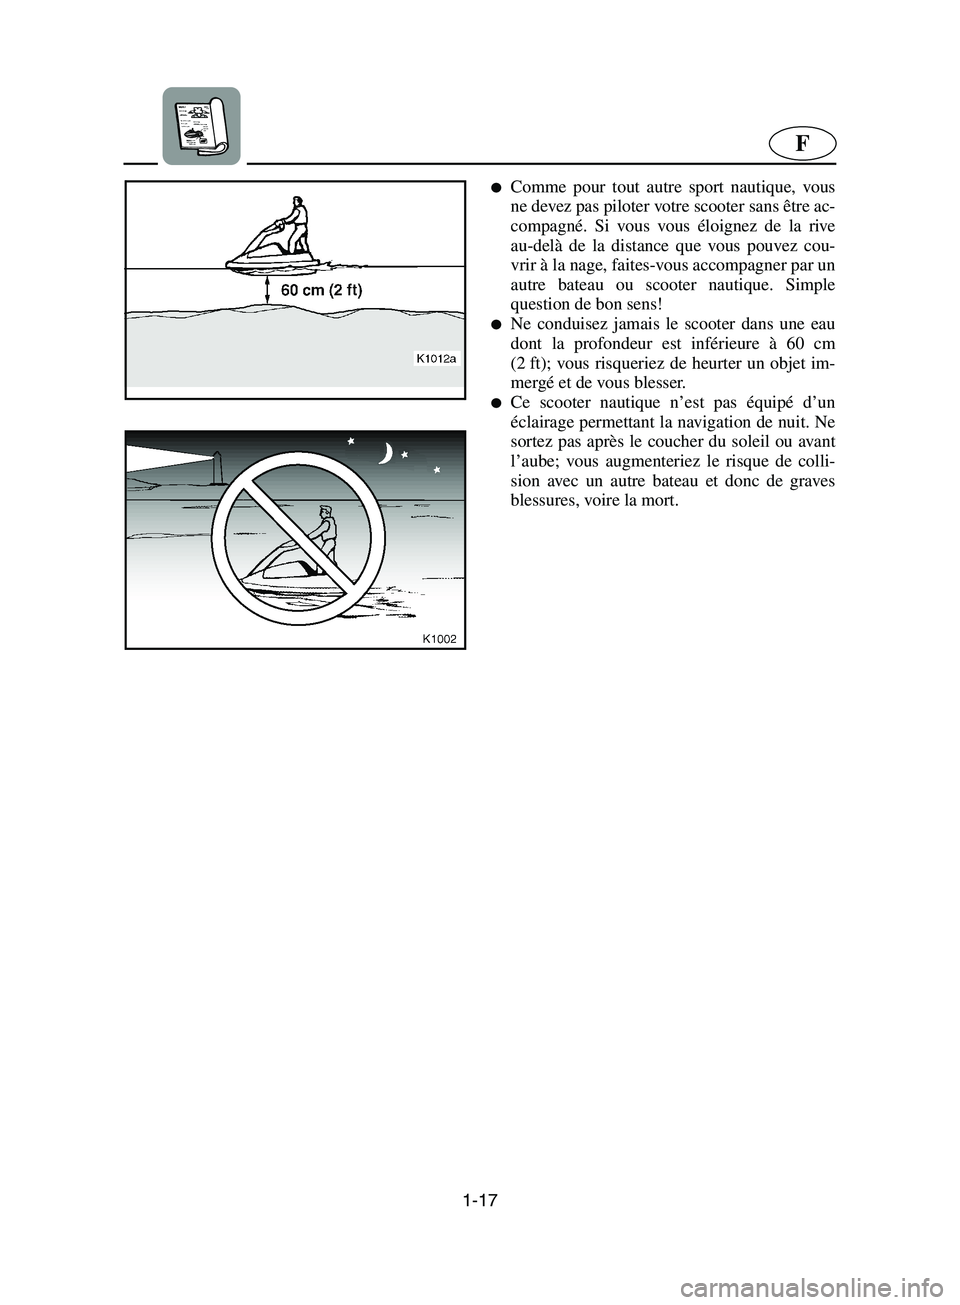 YAMAHA SUPERJET 2002  Manuale de Empleo (in Spanish) 1-17
F
Comme pour tout autre sport nautique, vous
ne devez pas piloter votre scooter sans être ac-
compagné. Si vous vous éloignez de la rive
au-delà de la distance que vous pouvez cou-
vrir à l